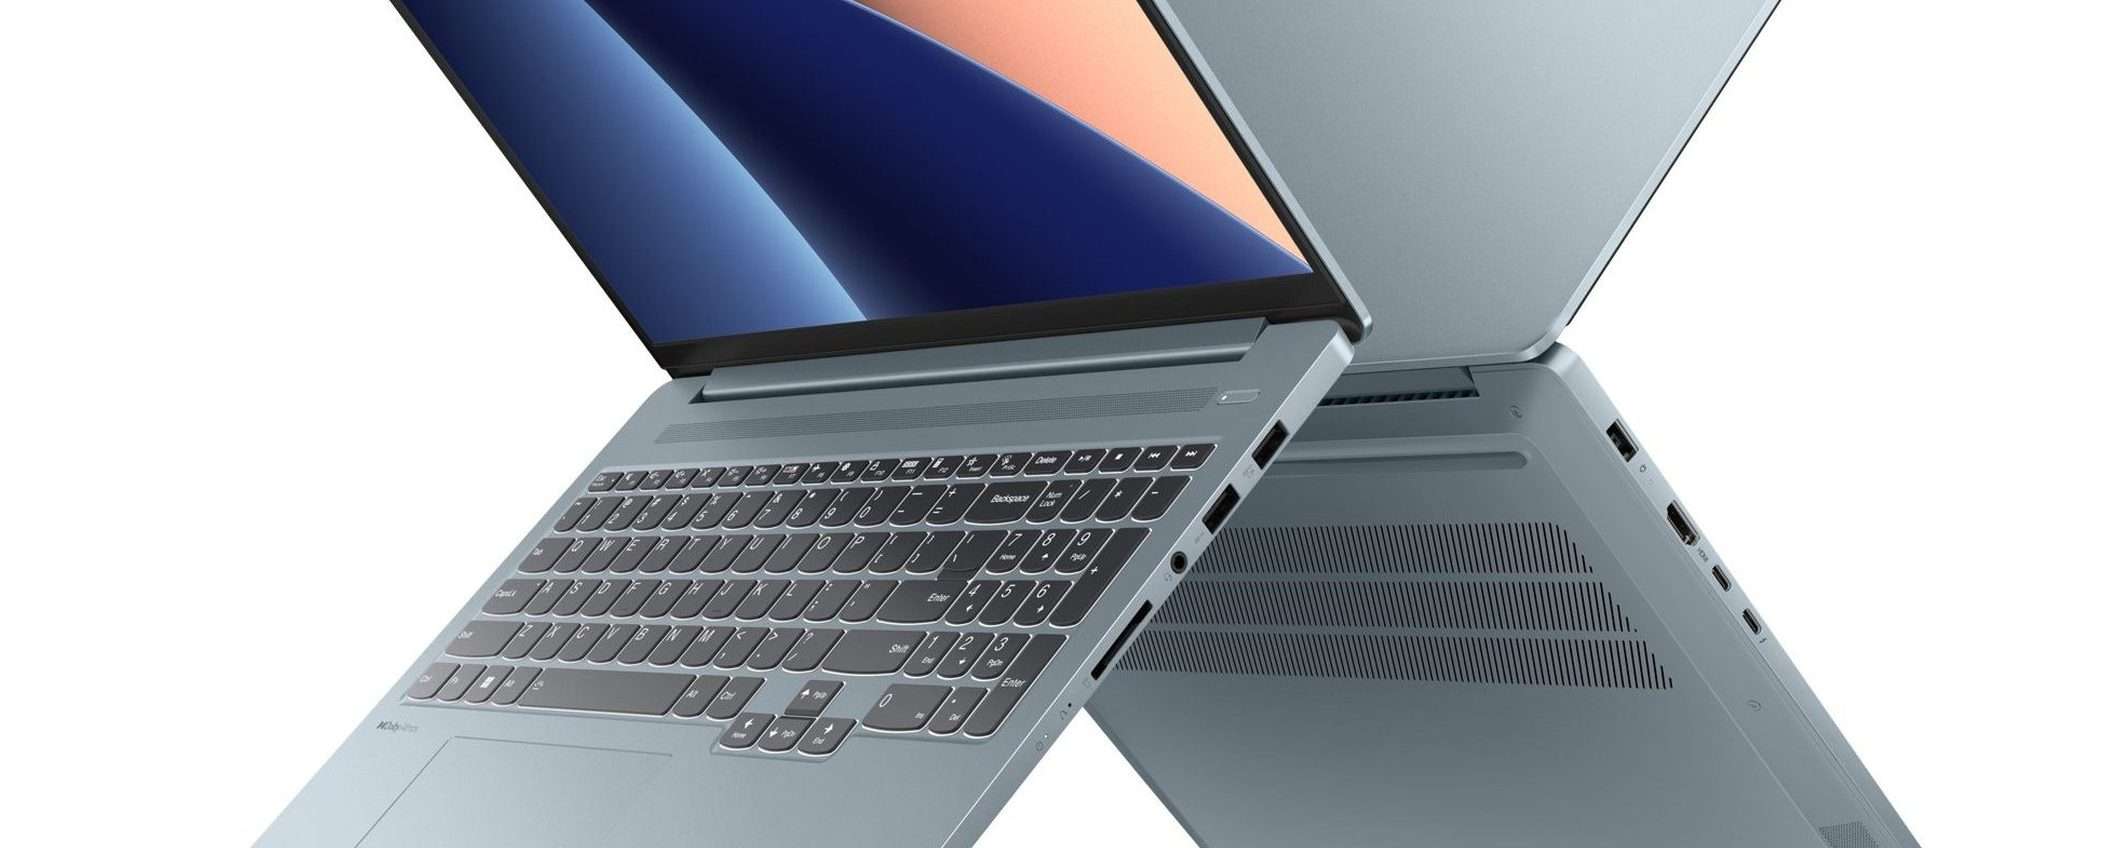 Lenovo annuncia nuovi notebook IdeaPad